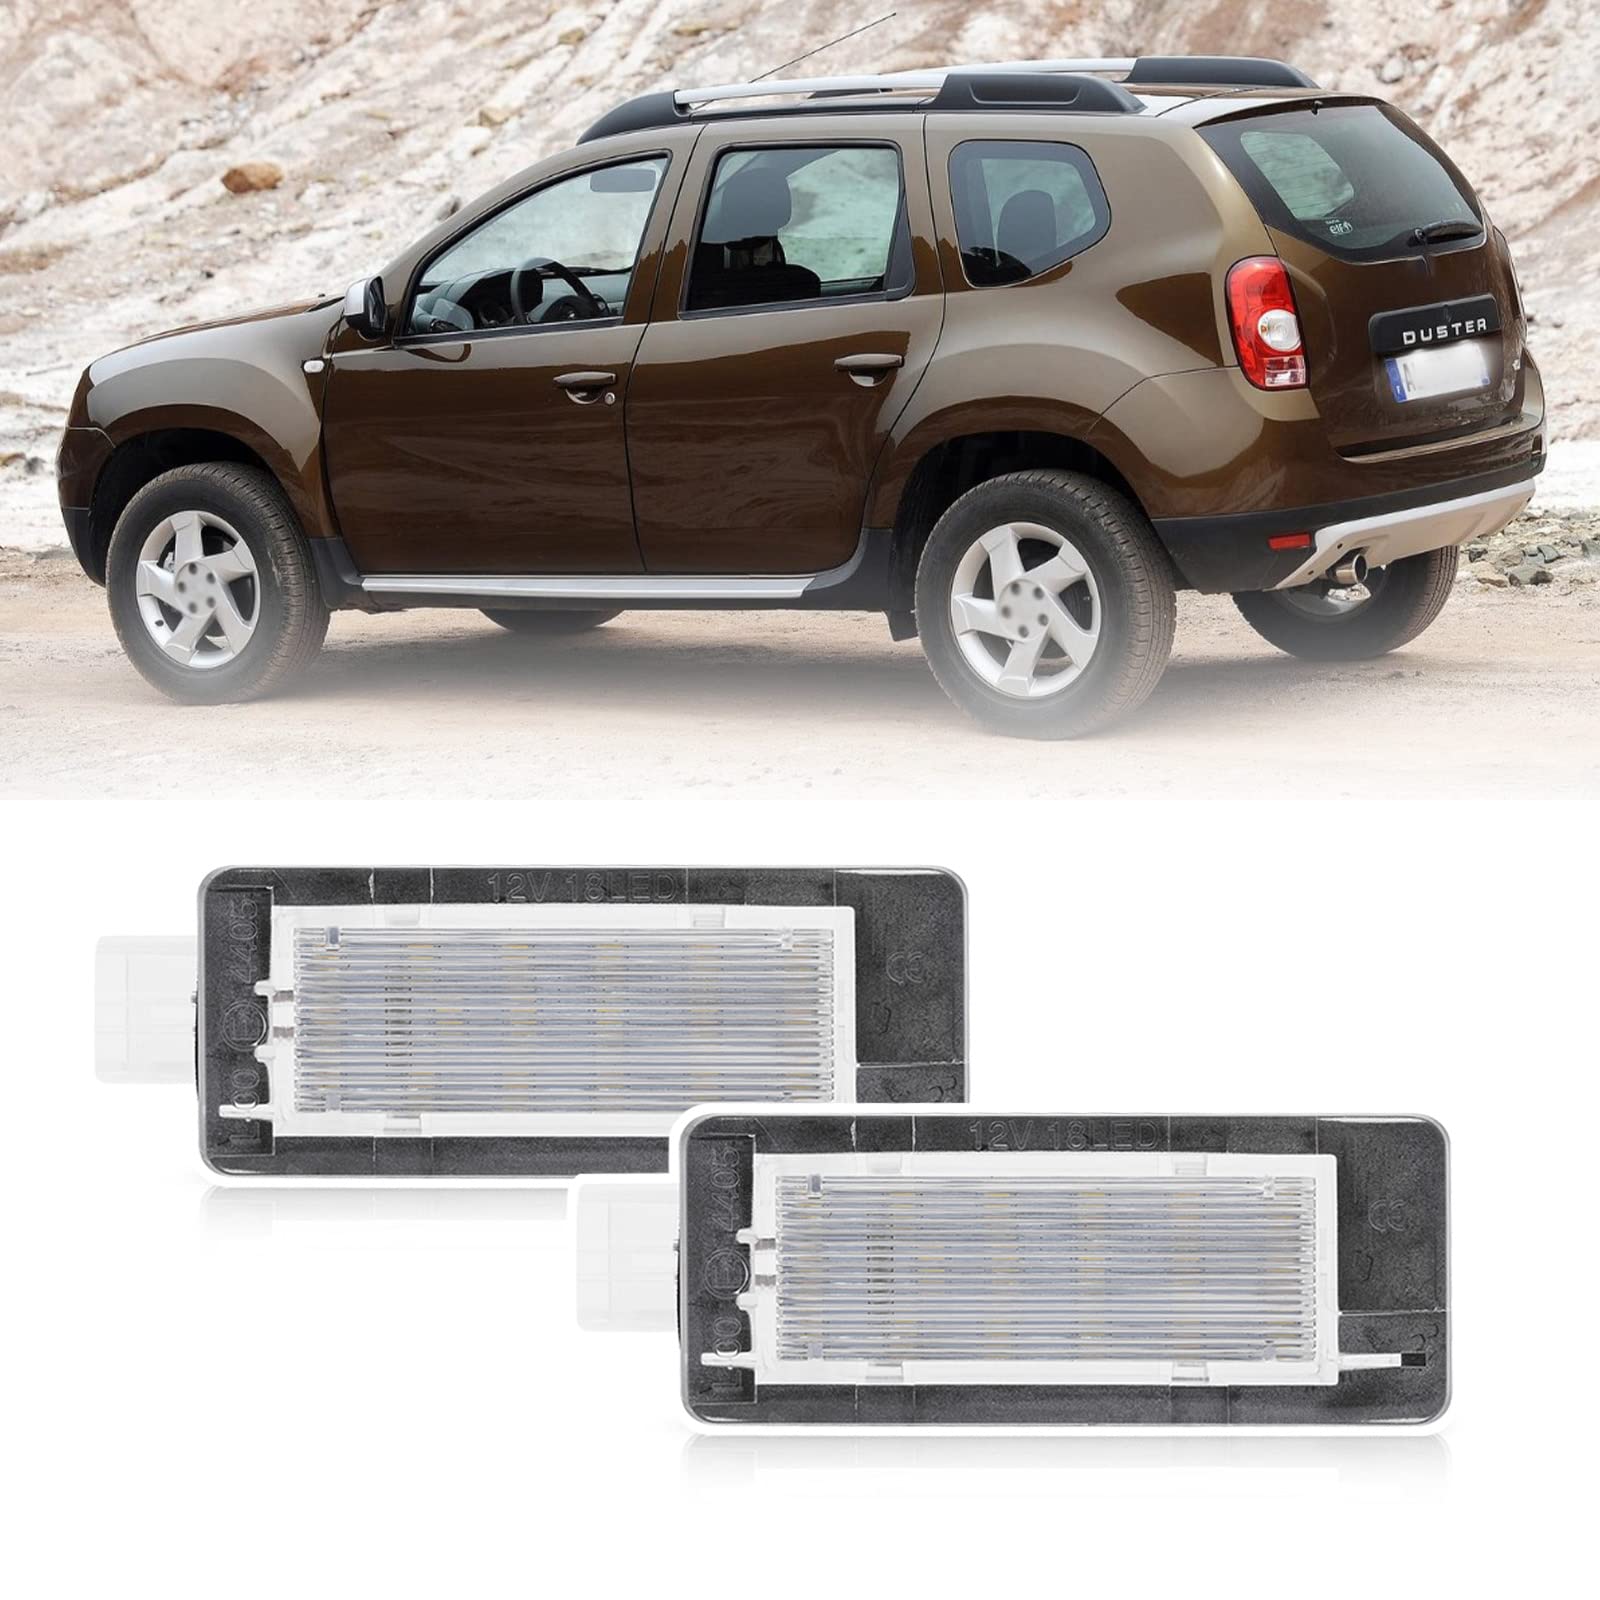 njssjd 2x LED Kennzeichenbeleuchtung kompatibel mit Dacia Duster 2010-2015, Dacia Lodgy II 2013-2021, Dacia Logan MCV II Kennzeichenbeleuchtung Heckleuchte von njssjd